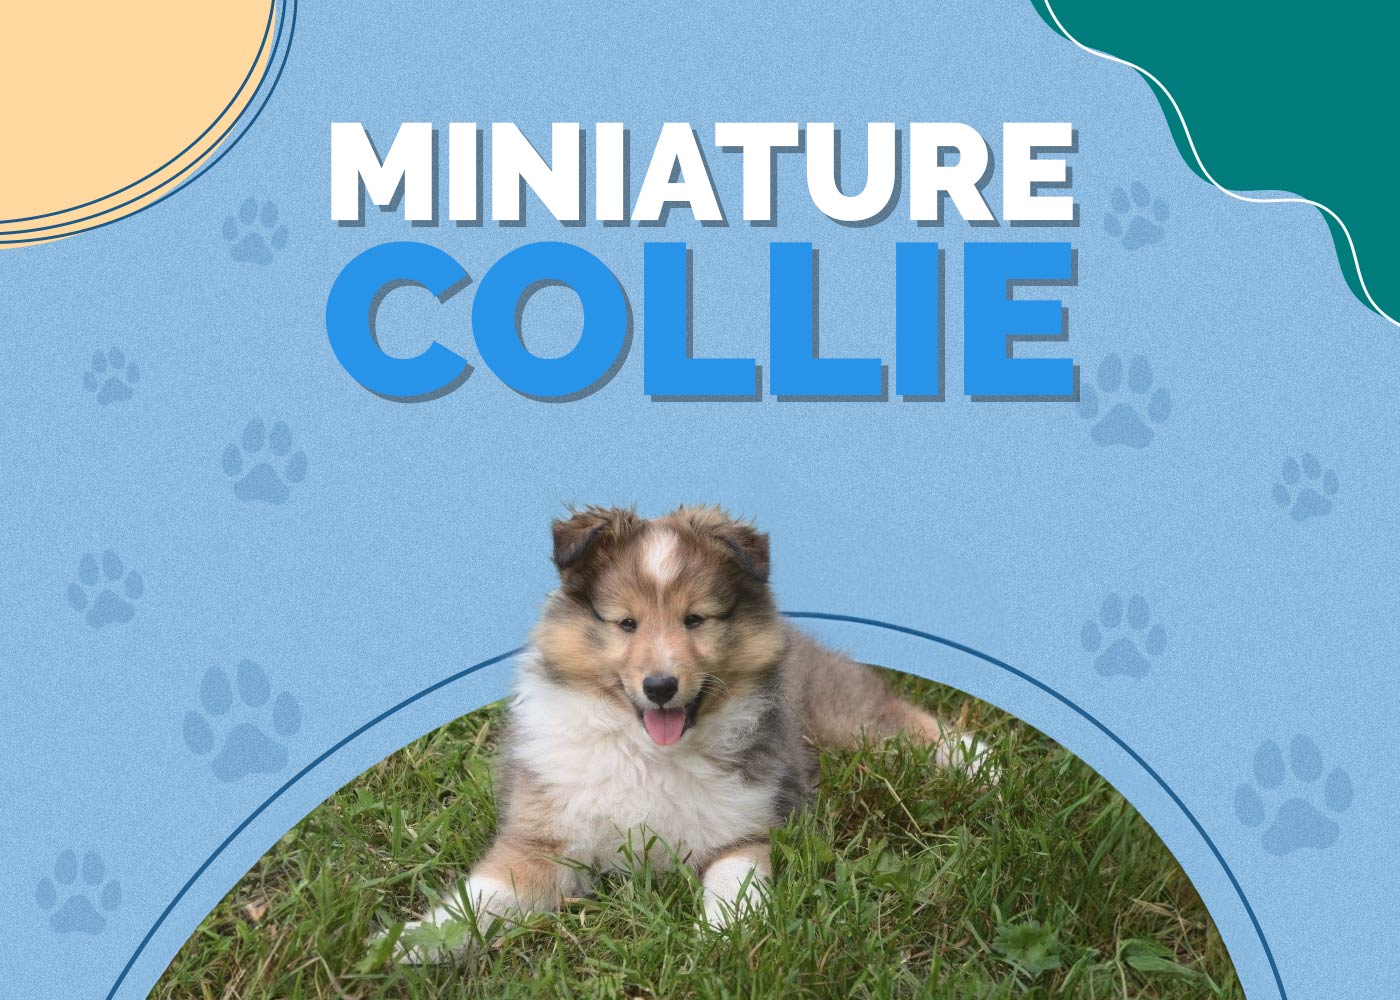 Miniature Collie